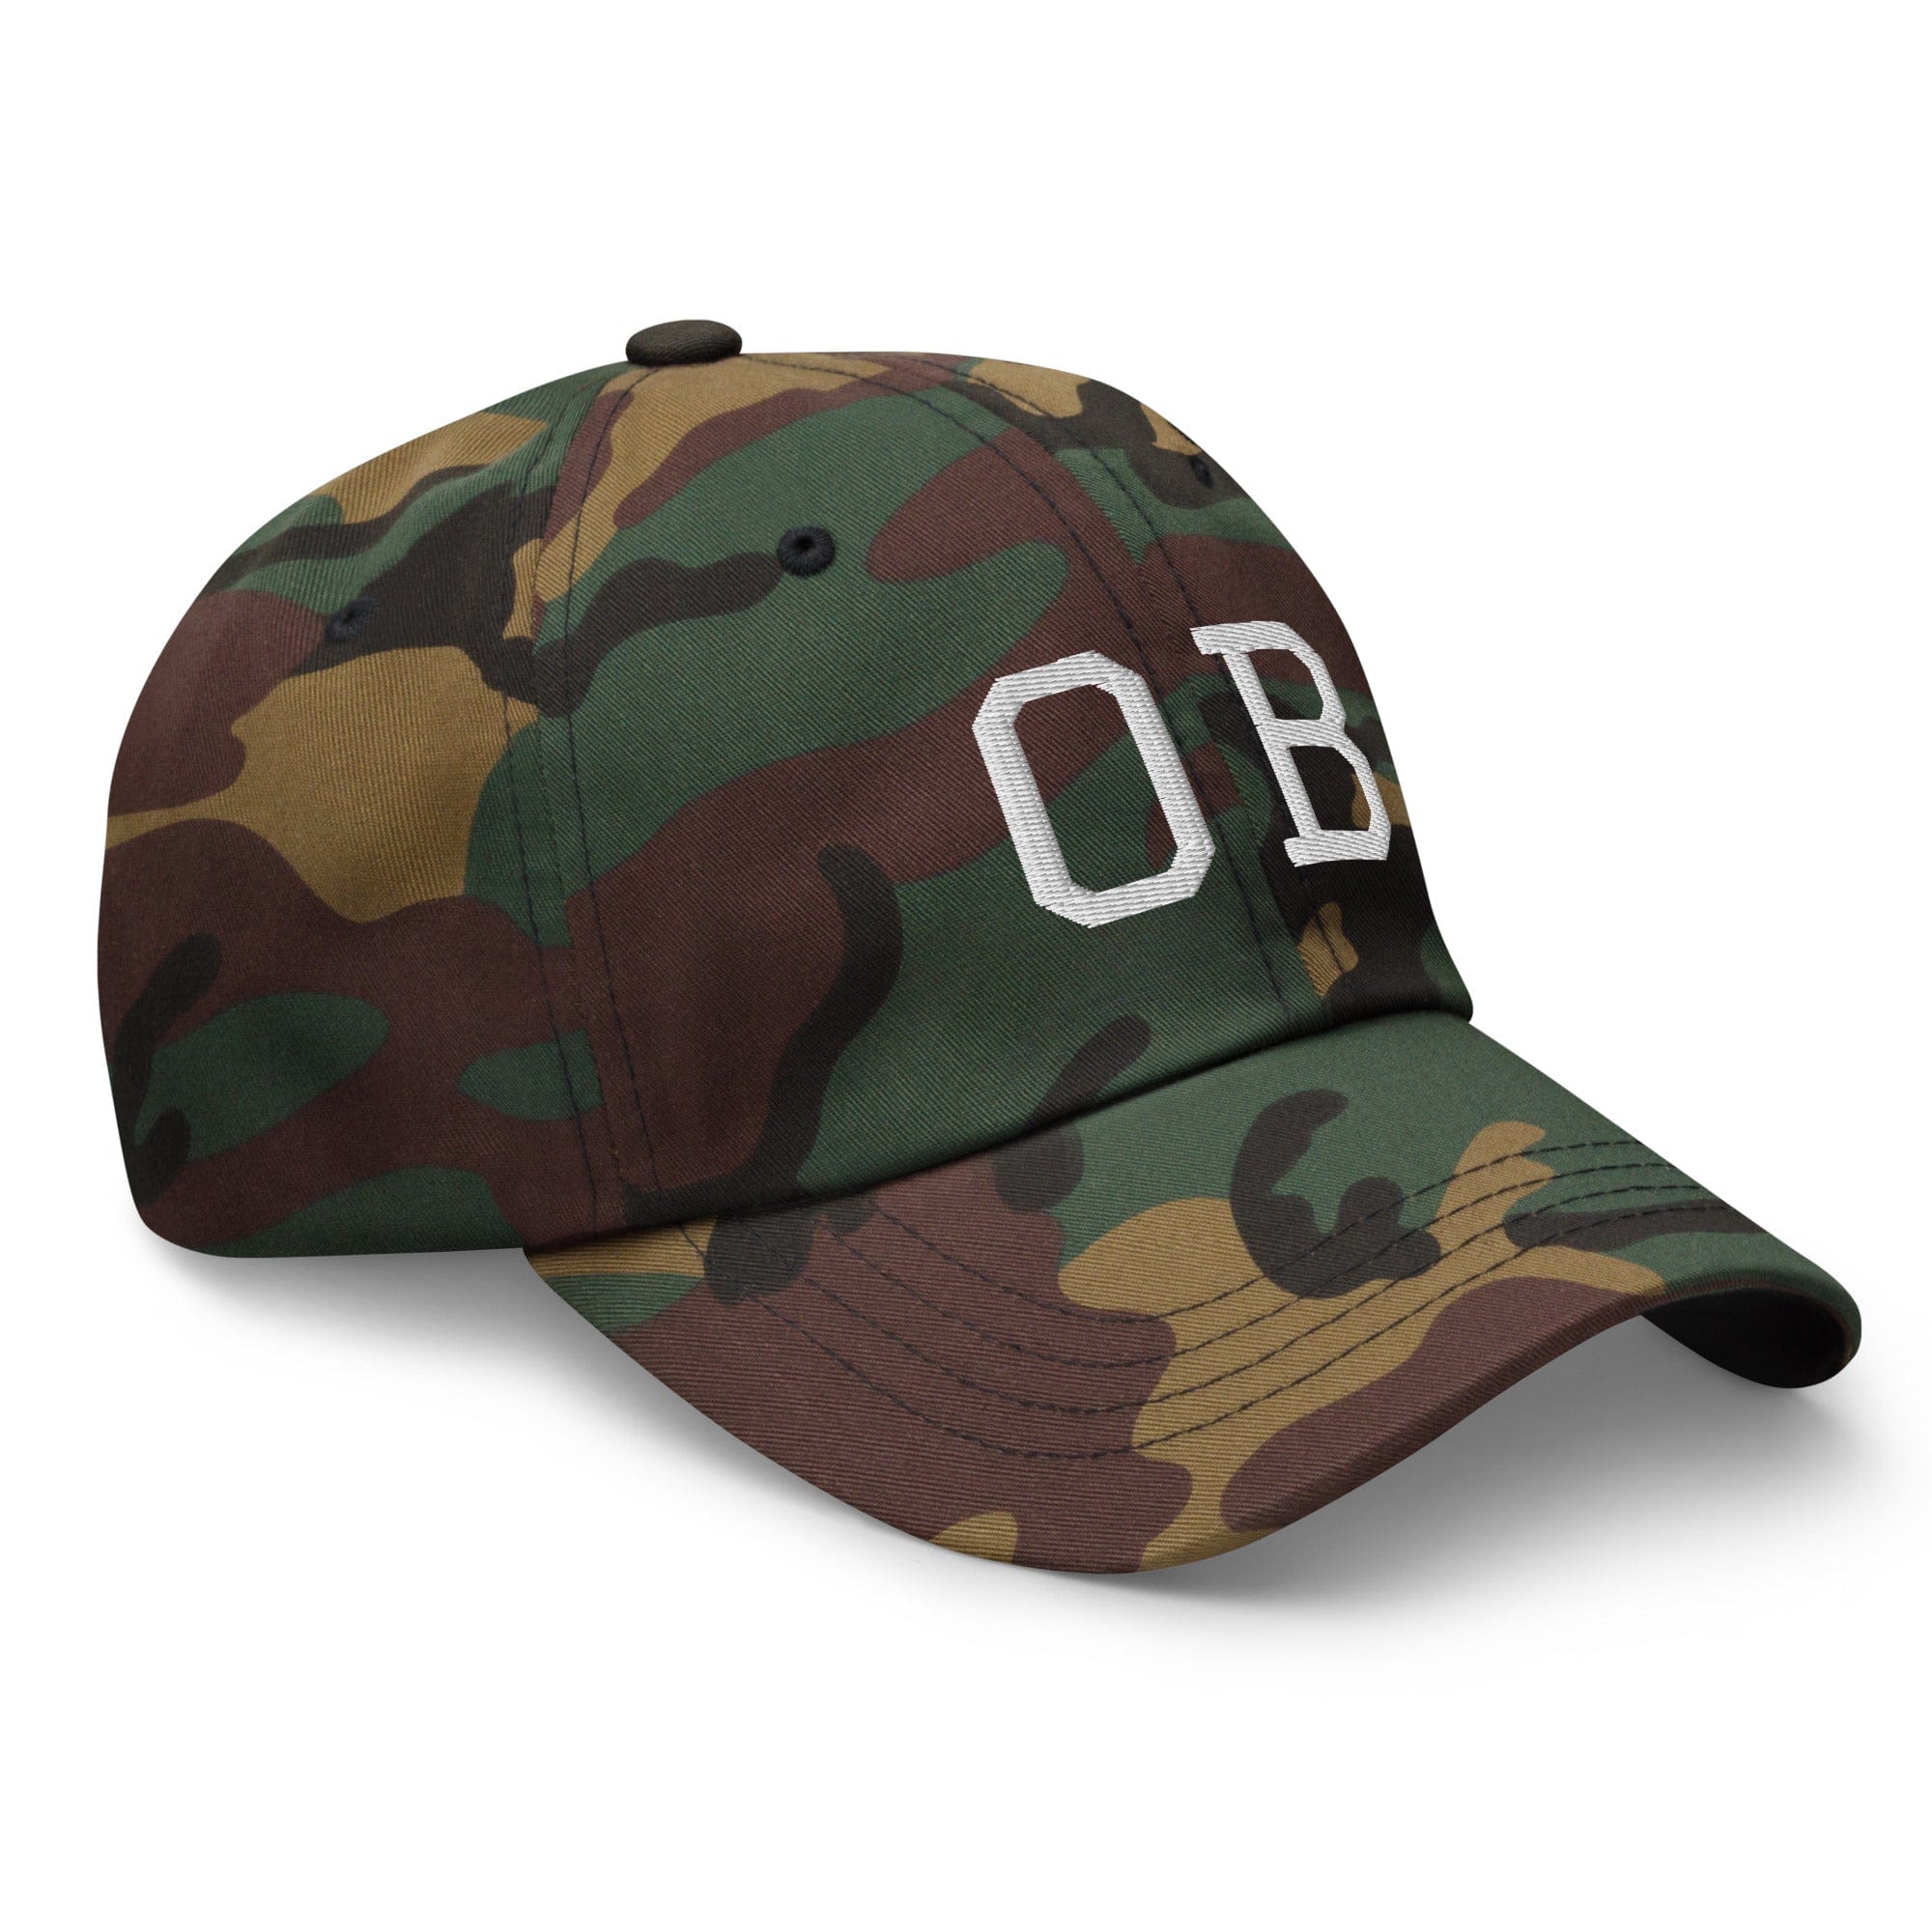 OB Dad Hat